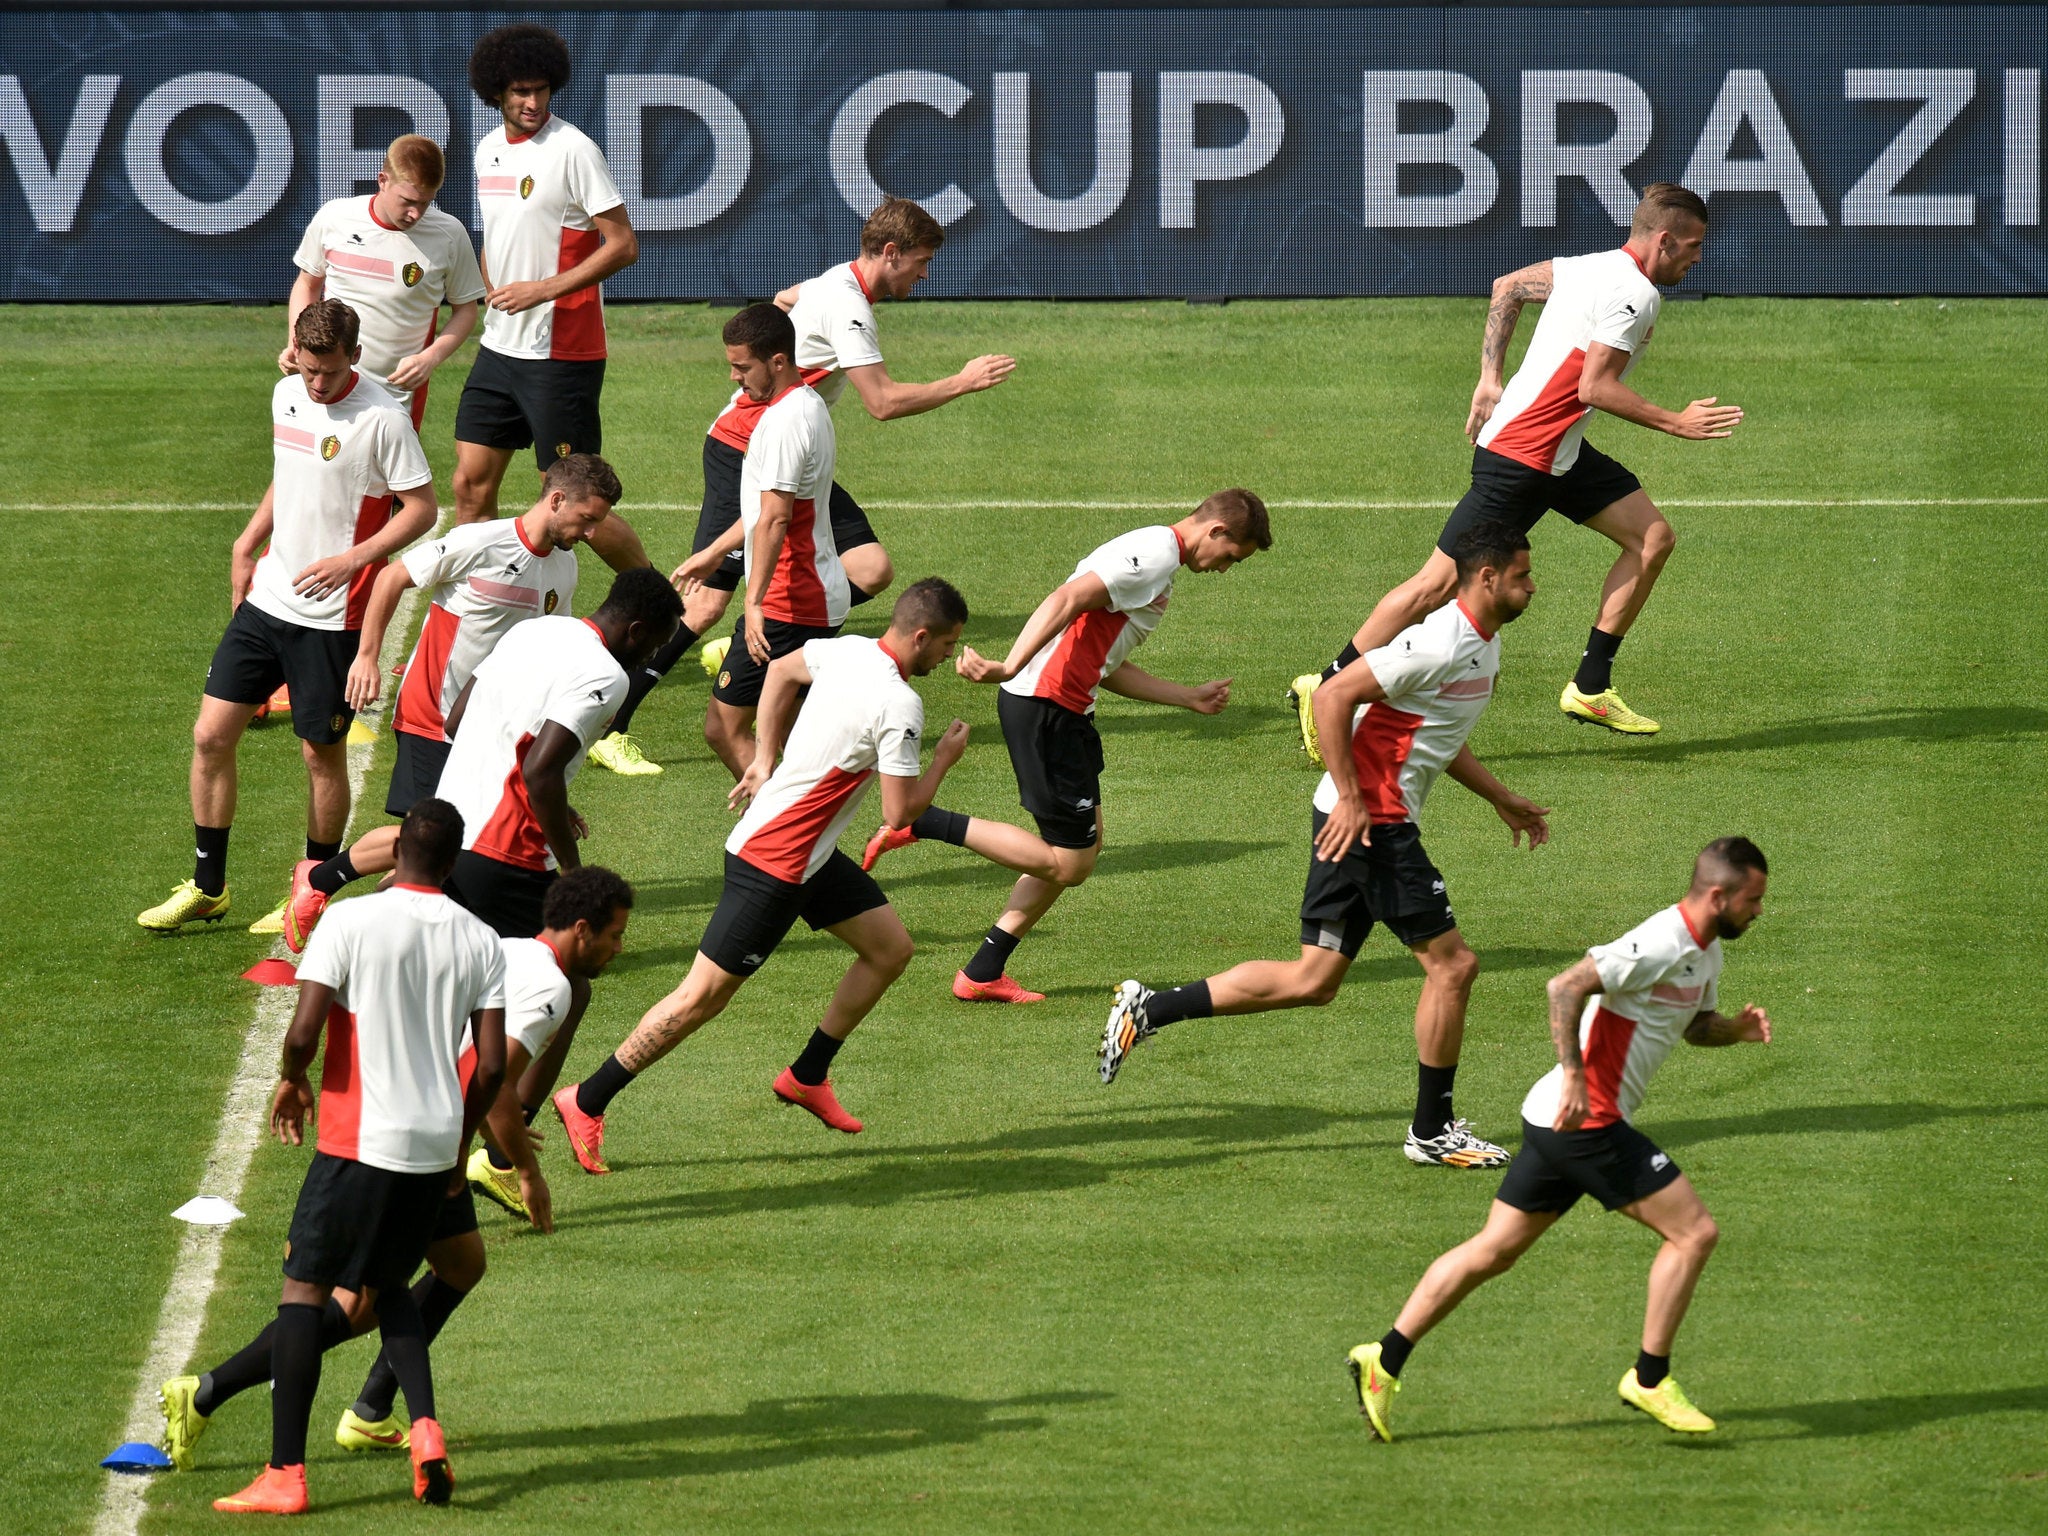 Belgium prepare for their crucial test against Russia